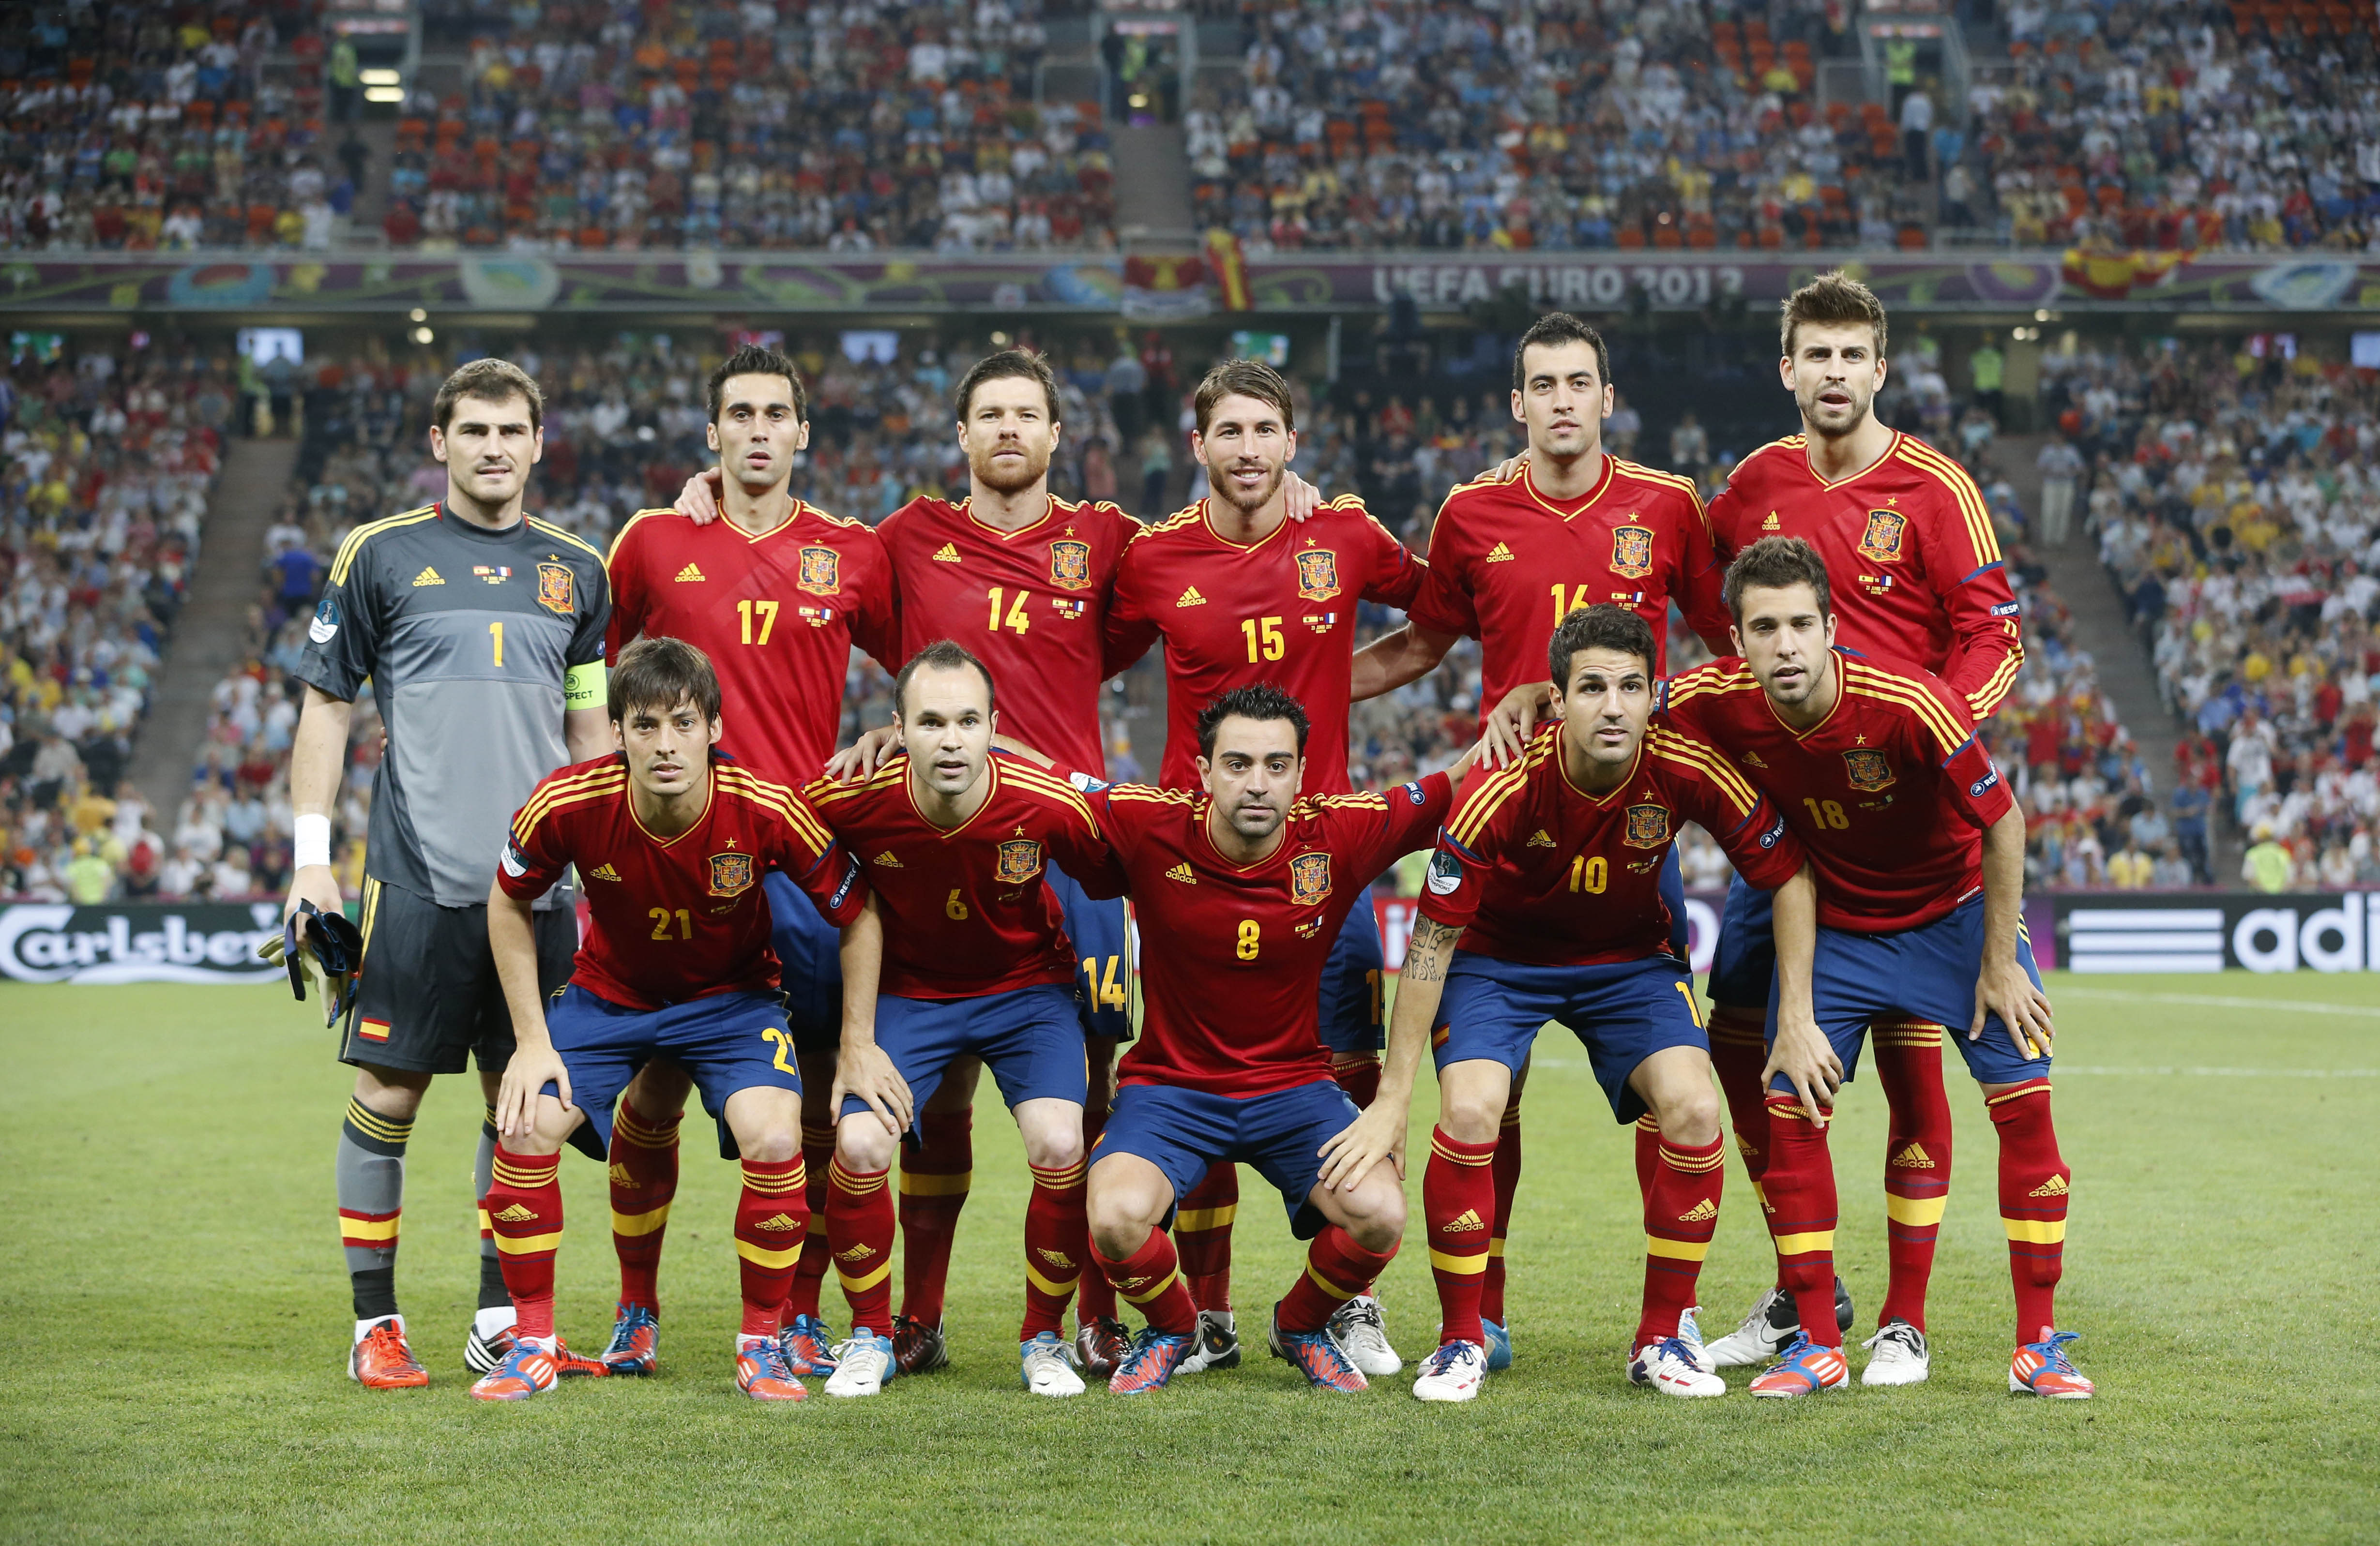 Fotbolls-EM, Italien, Spanien, Mario Balotelli, Manchester City, Tyskland